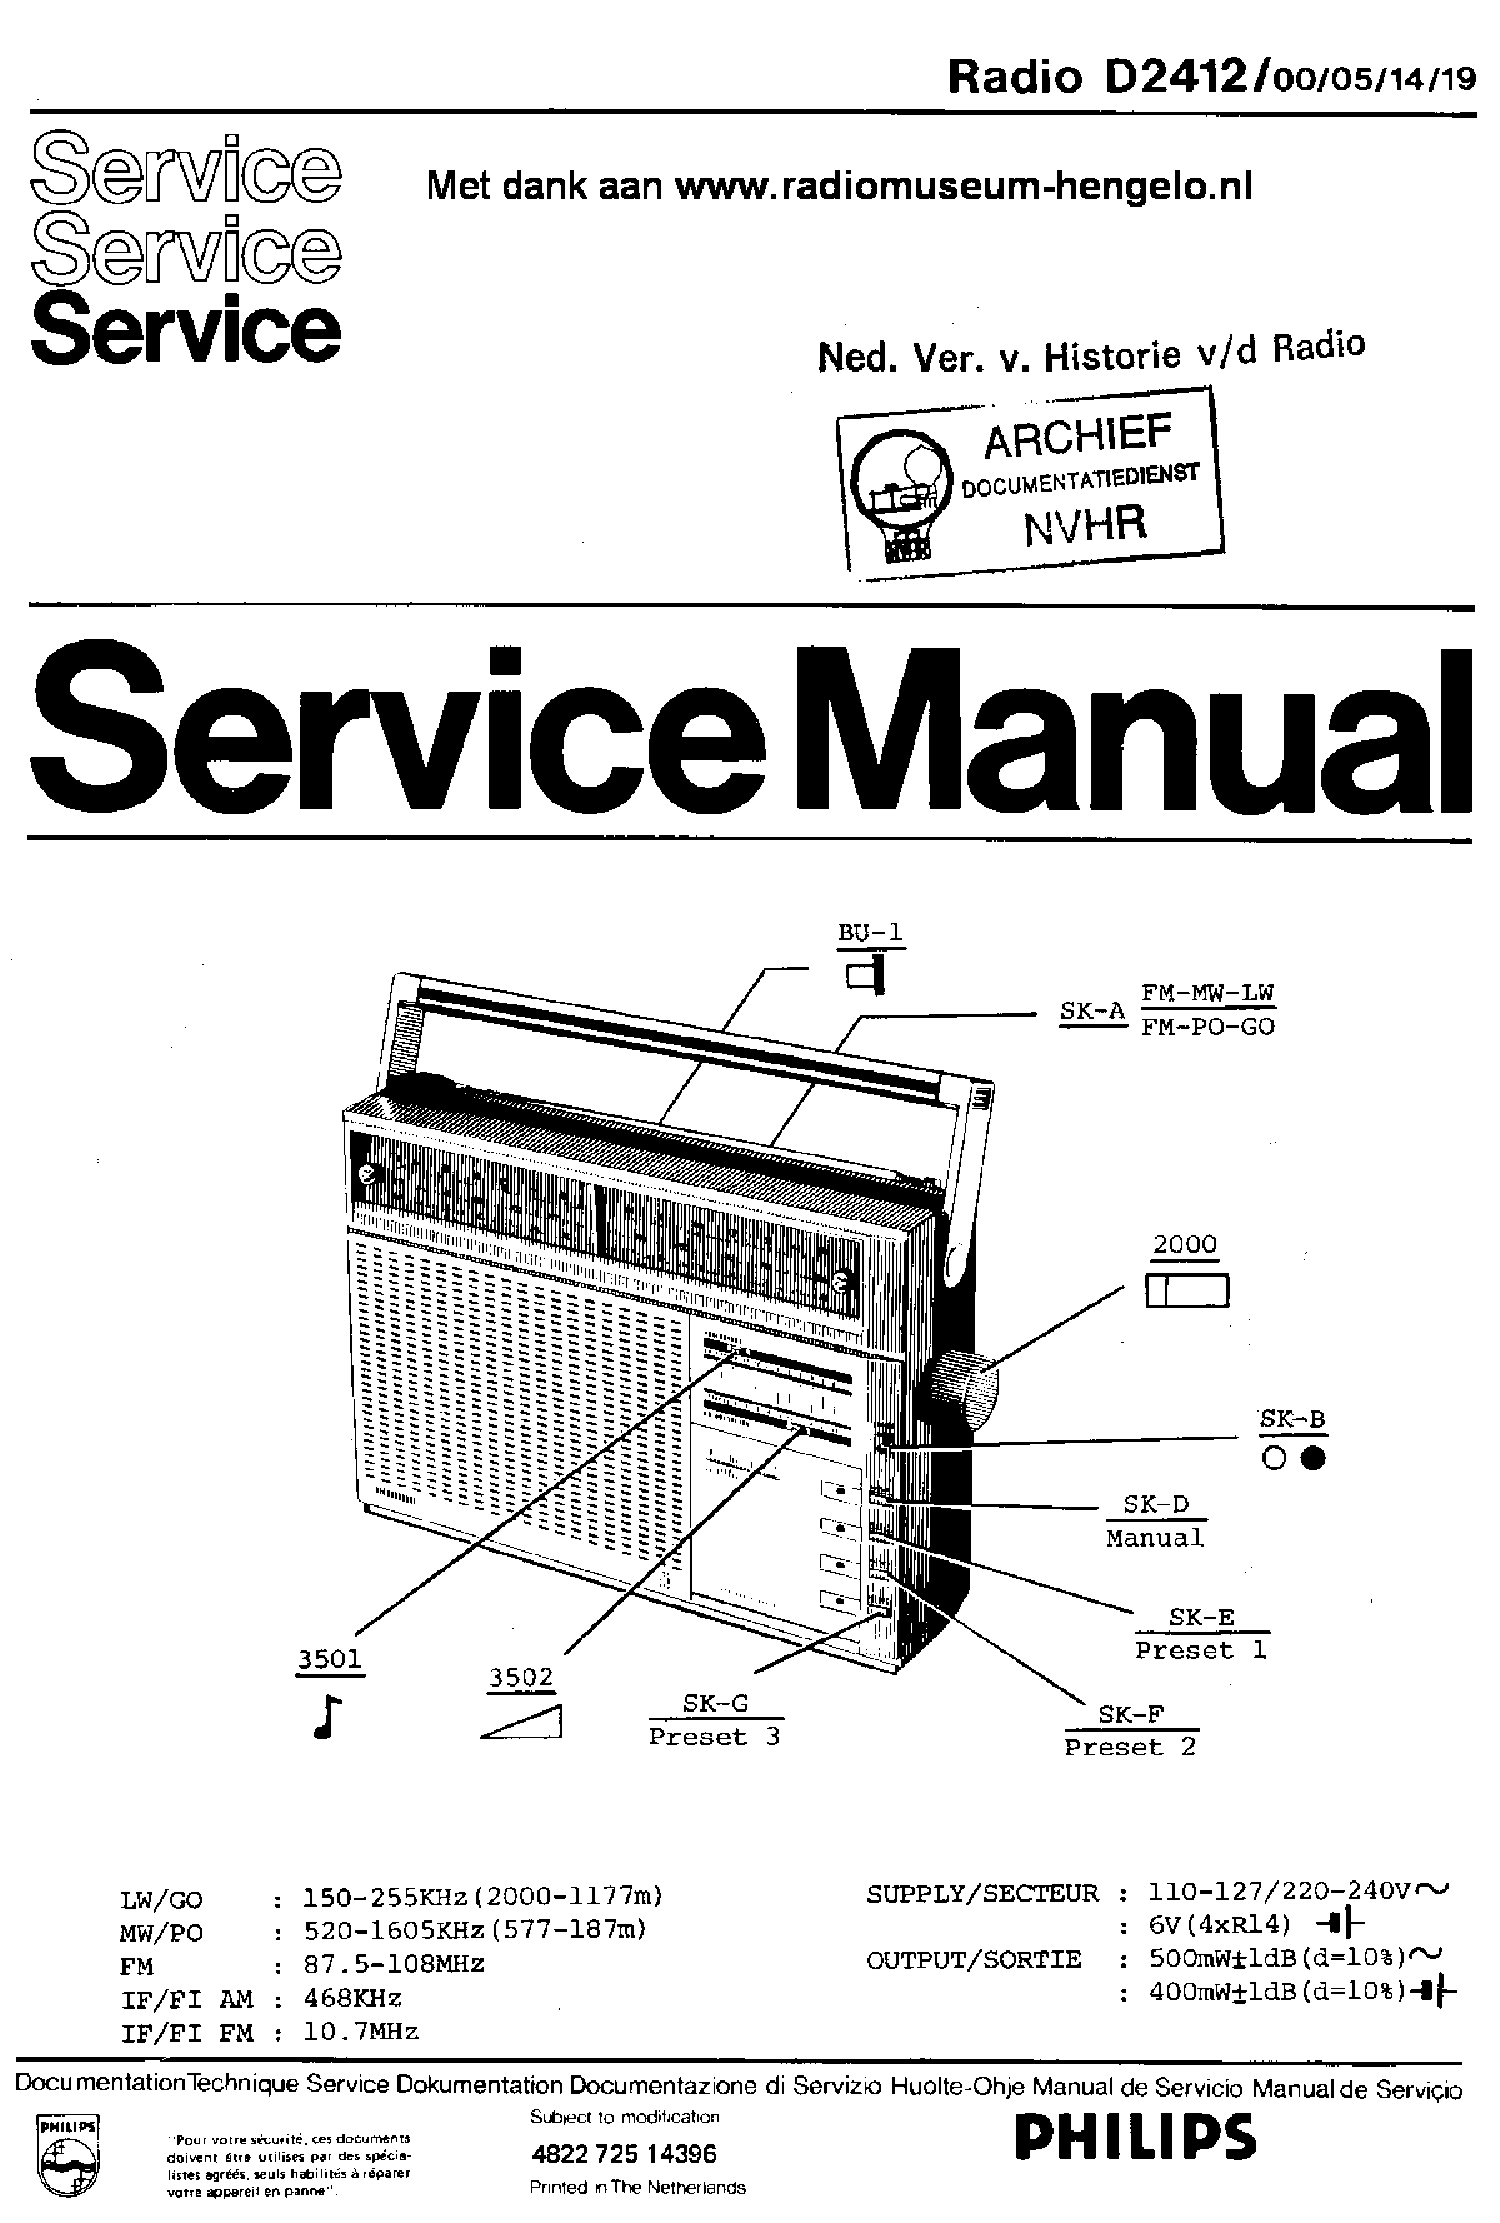 PHILIPS D2412-00-05-14-19 AM-FM PORTABLE RADIO 1984 SM service manual (1st page)